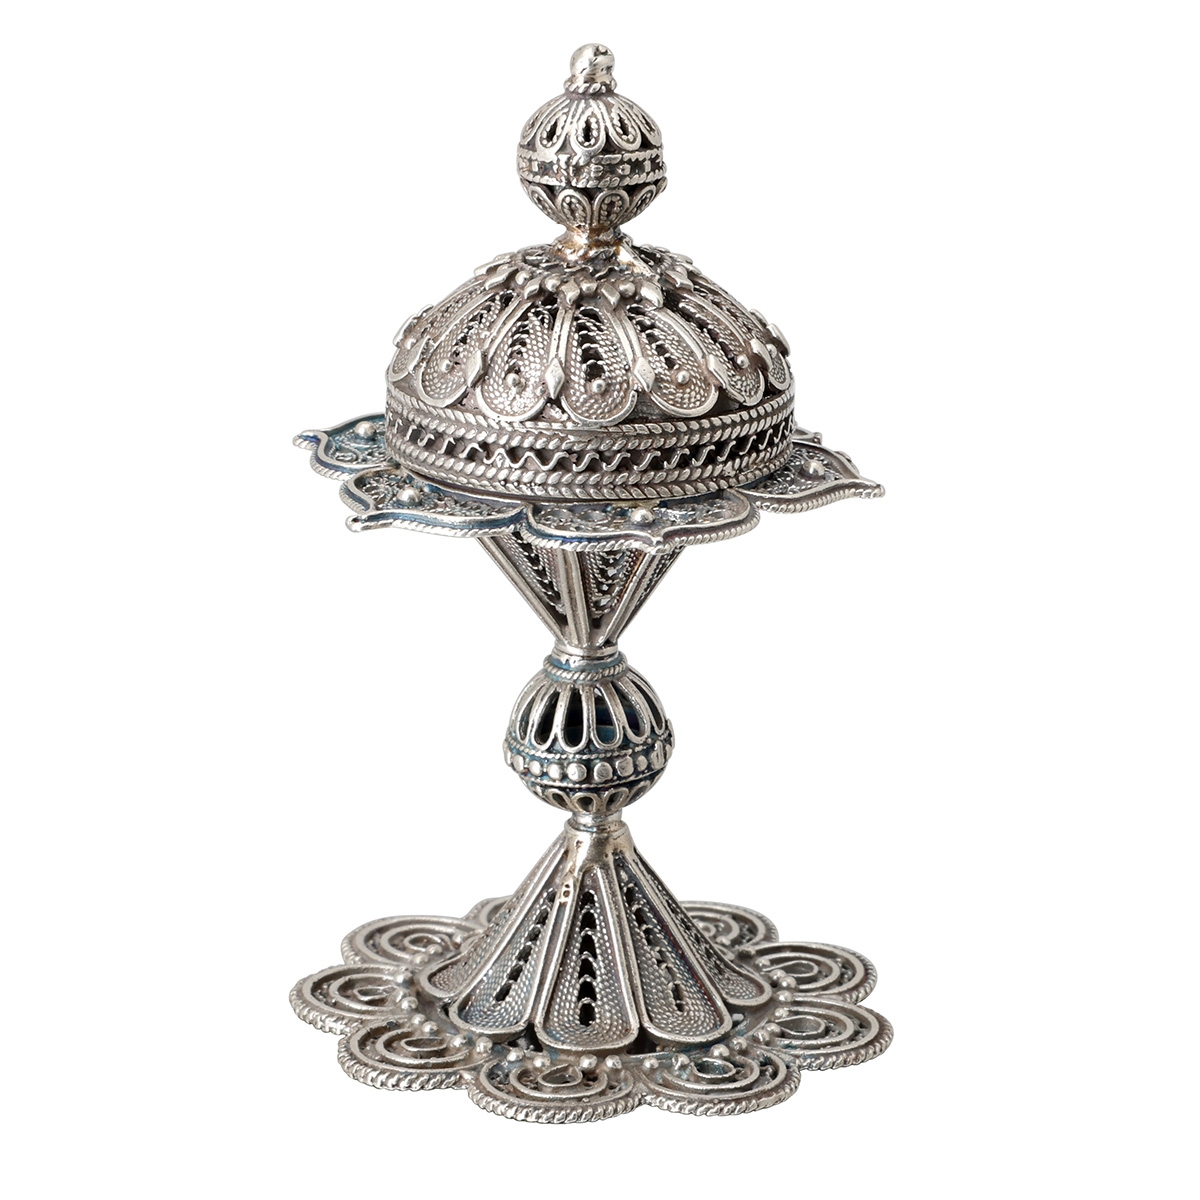 Royal Persian Besamim Spice Box, Sterling Silver - 1